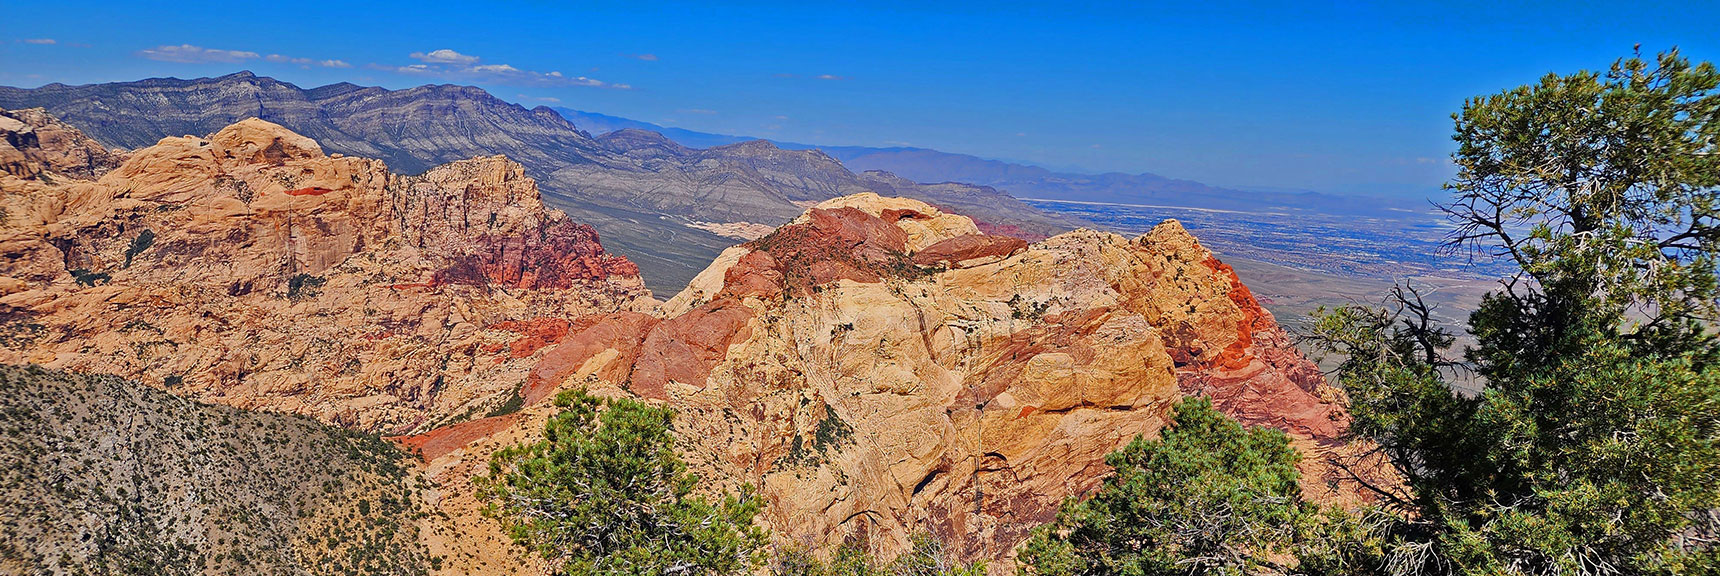 Left to Right: Bridge Mt., Juniper Peak, Rainbow Mt.; La Madre Mts. Background. | Mt Wilson to Juniper Peak | Rainbow Mountains Upper Crest Ridgeline | Rainbow Mountain Wilderness, Nevada